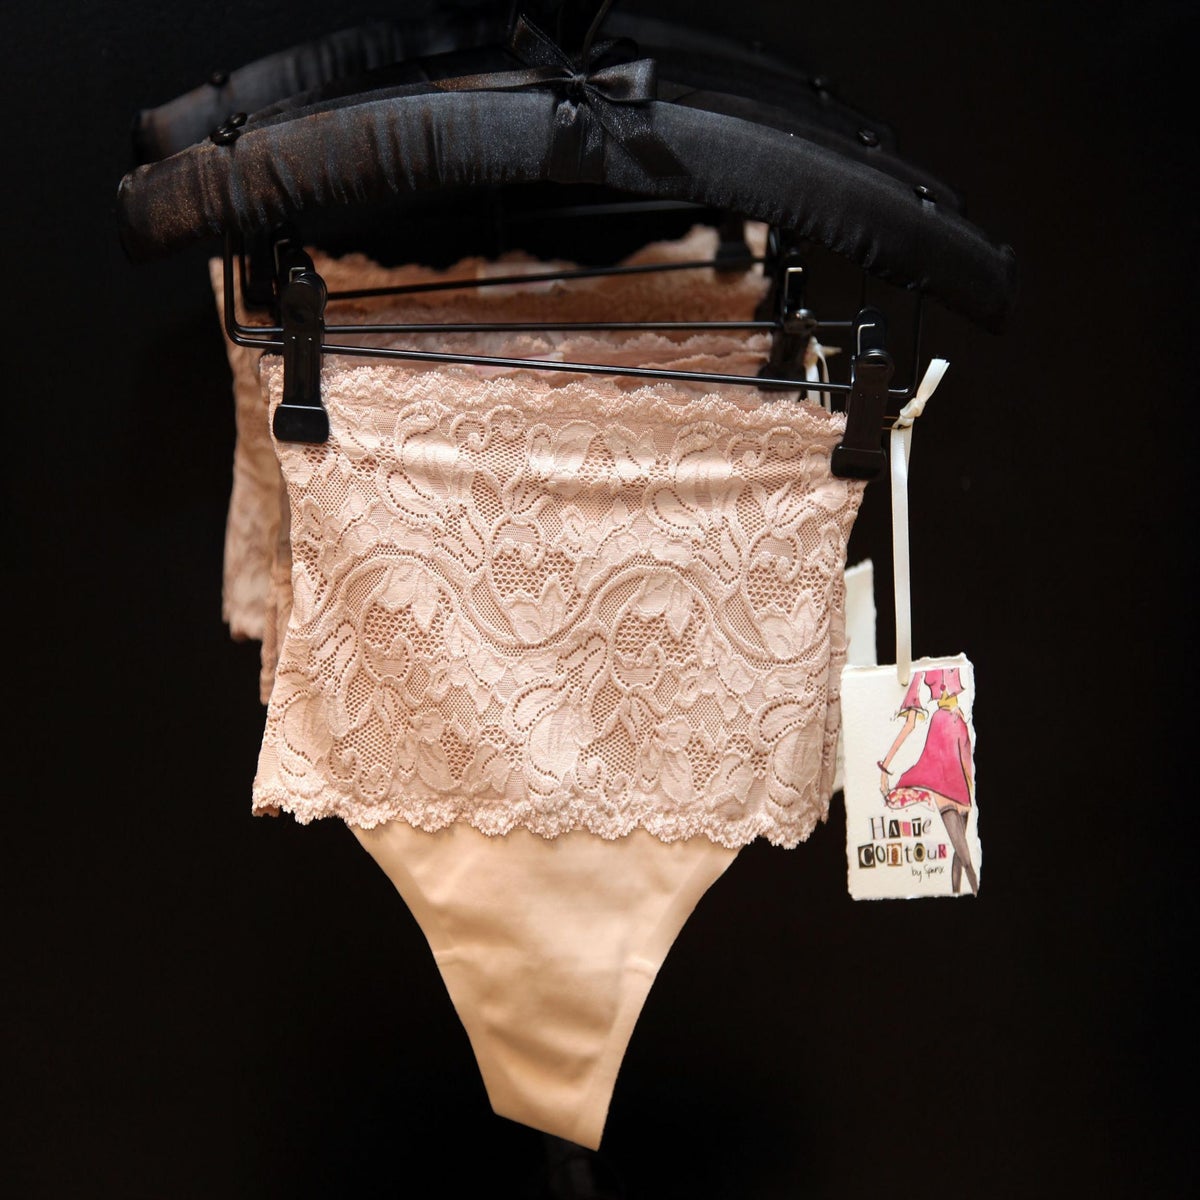 Bridget Jones-style 'granny pants' could be the next underwear